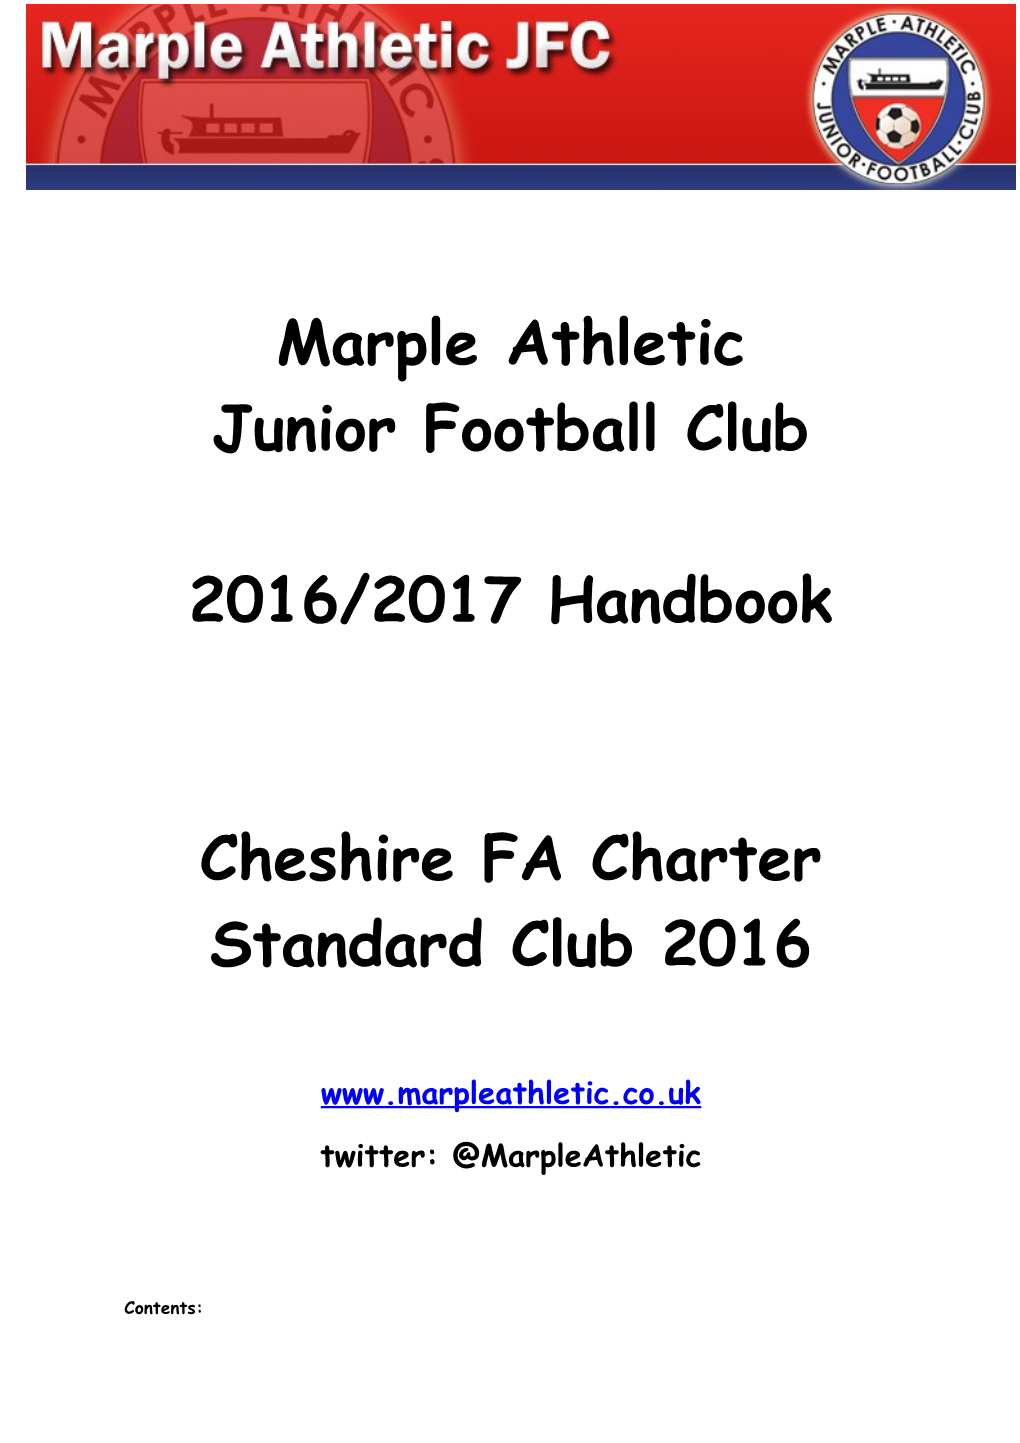 Cheshire FA Charter Standard Club 2016